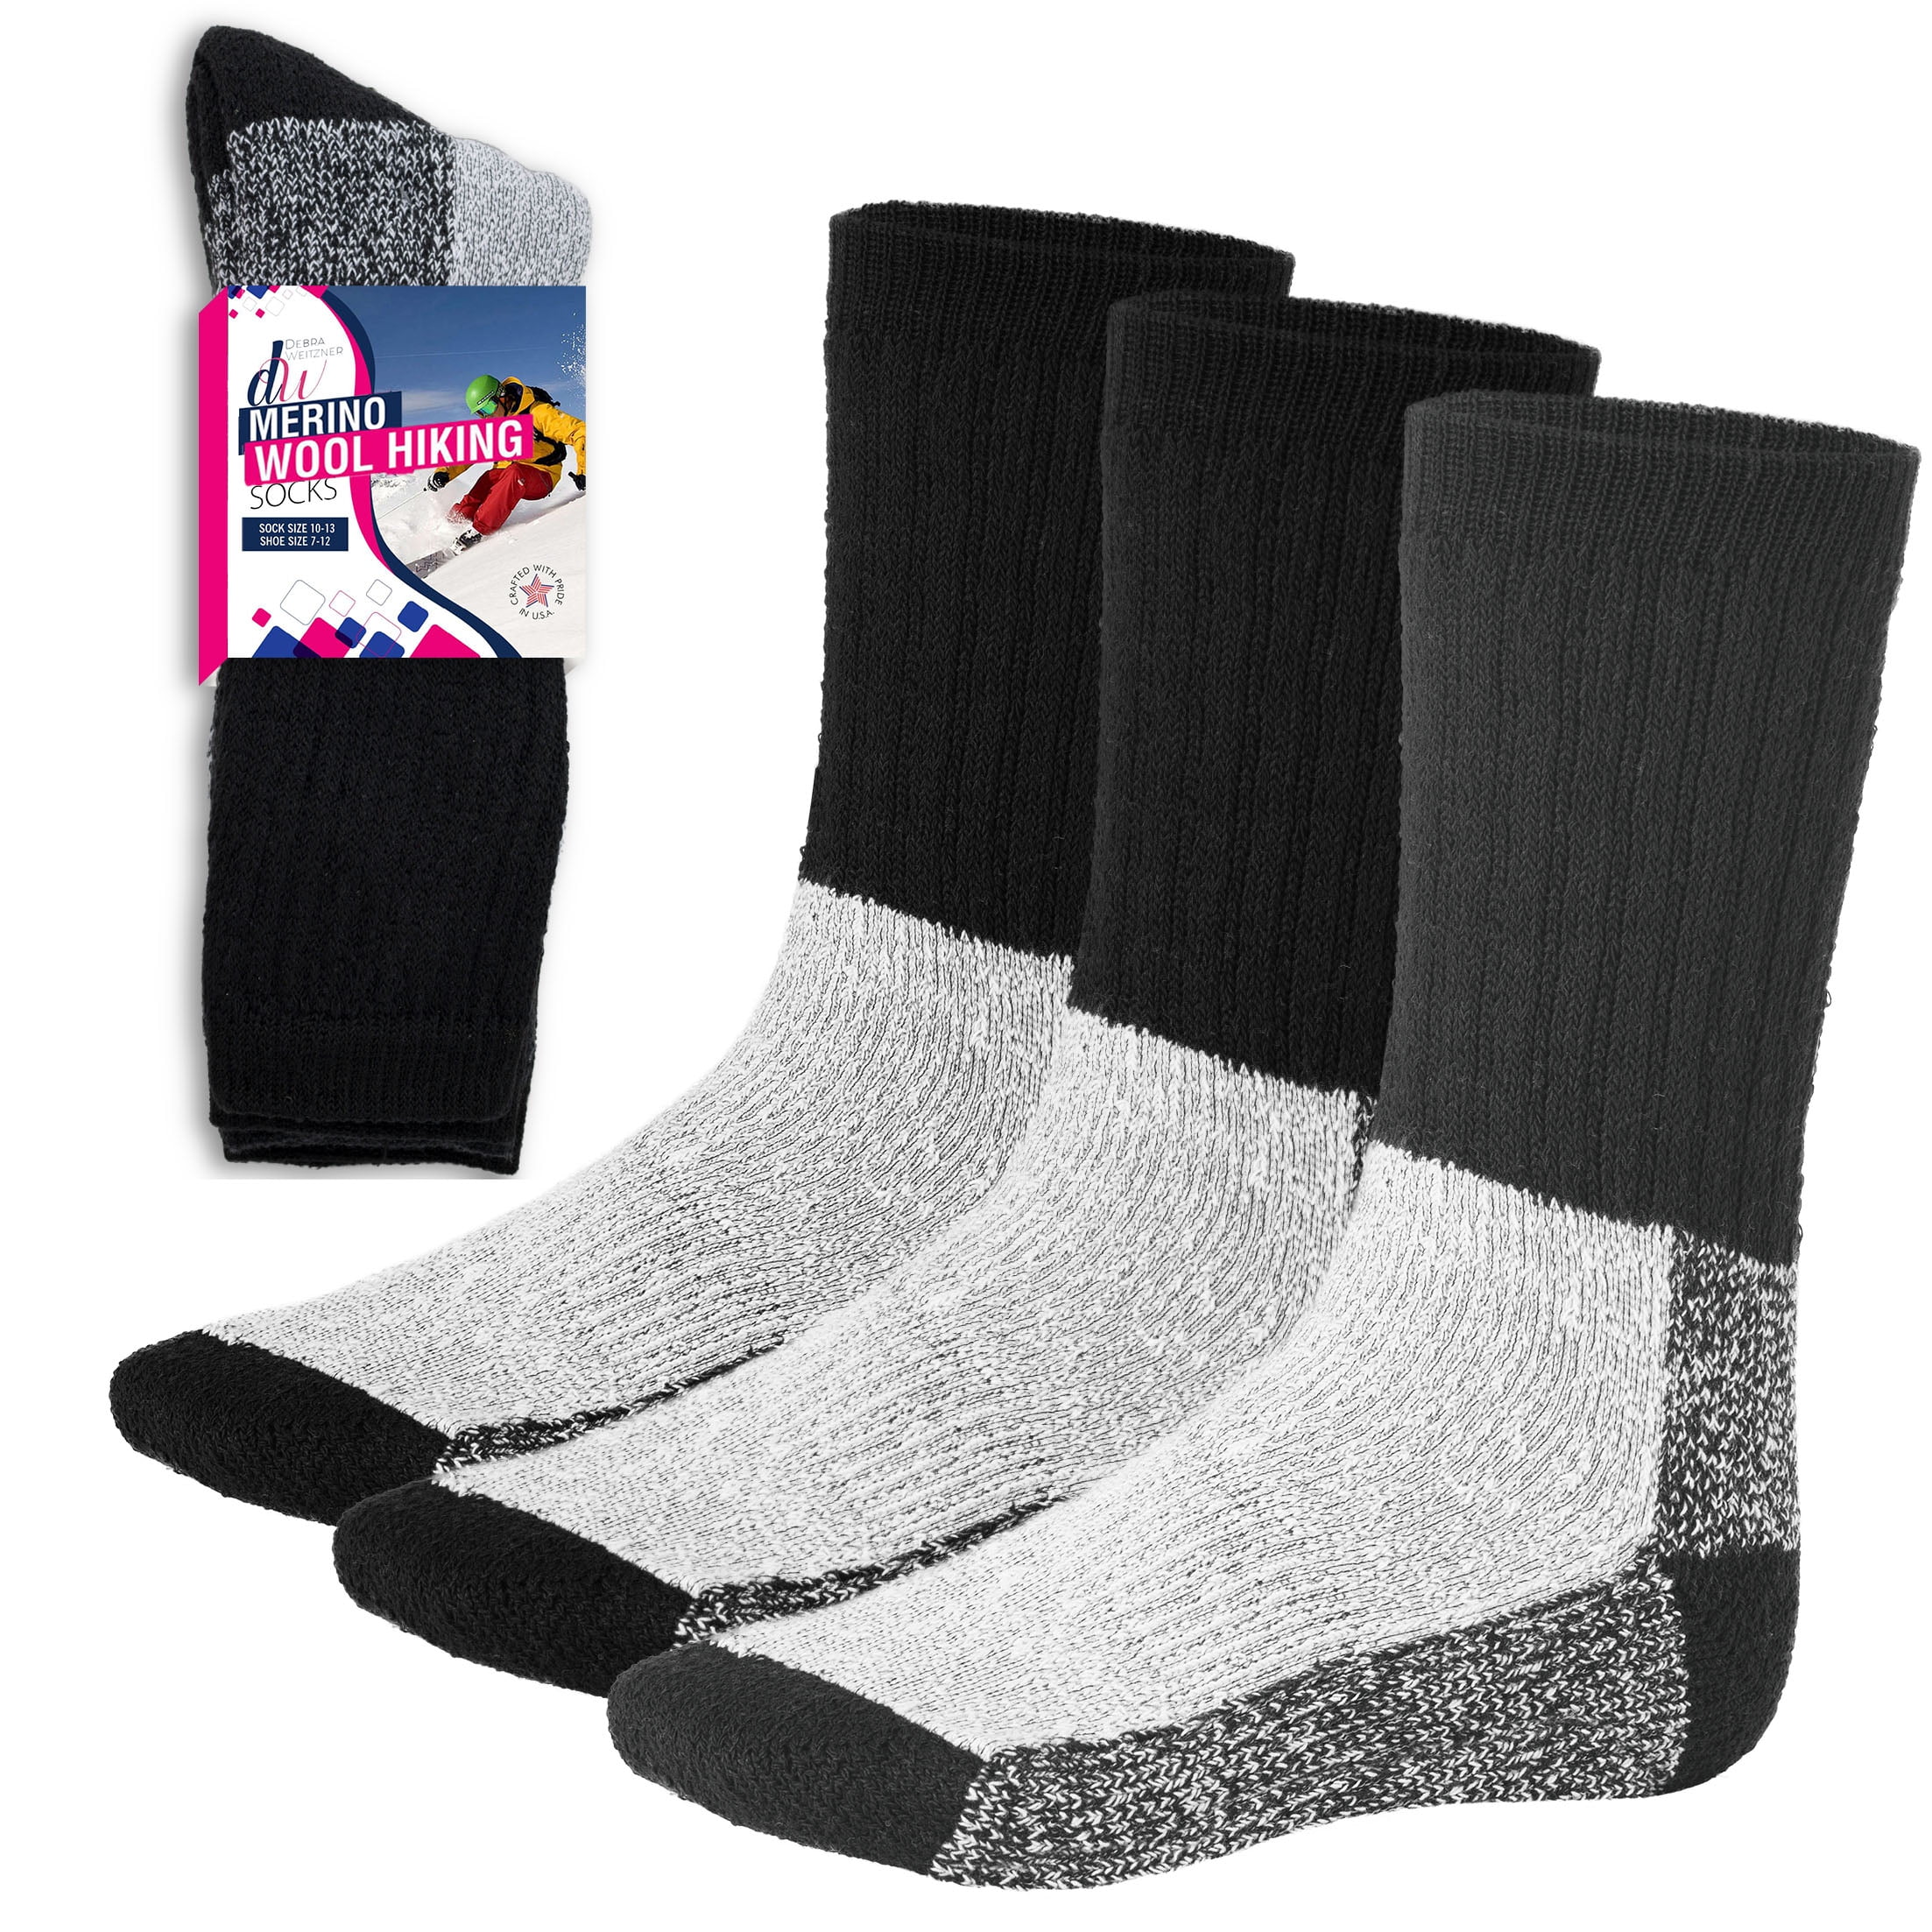 Realtree Thermal Boot Socks Men's Large 7-12 Black 4 Pair Pack Odor Protection 